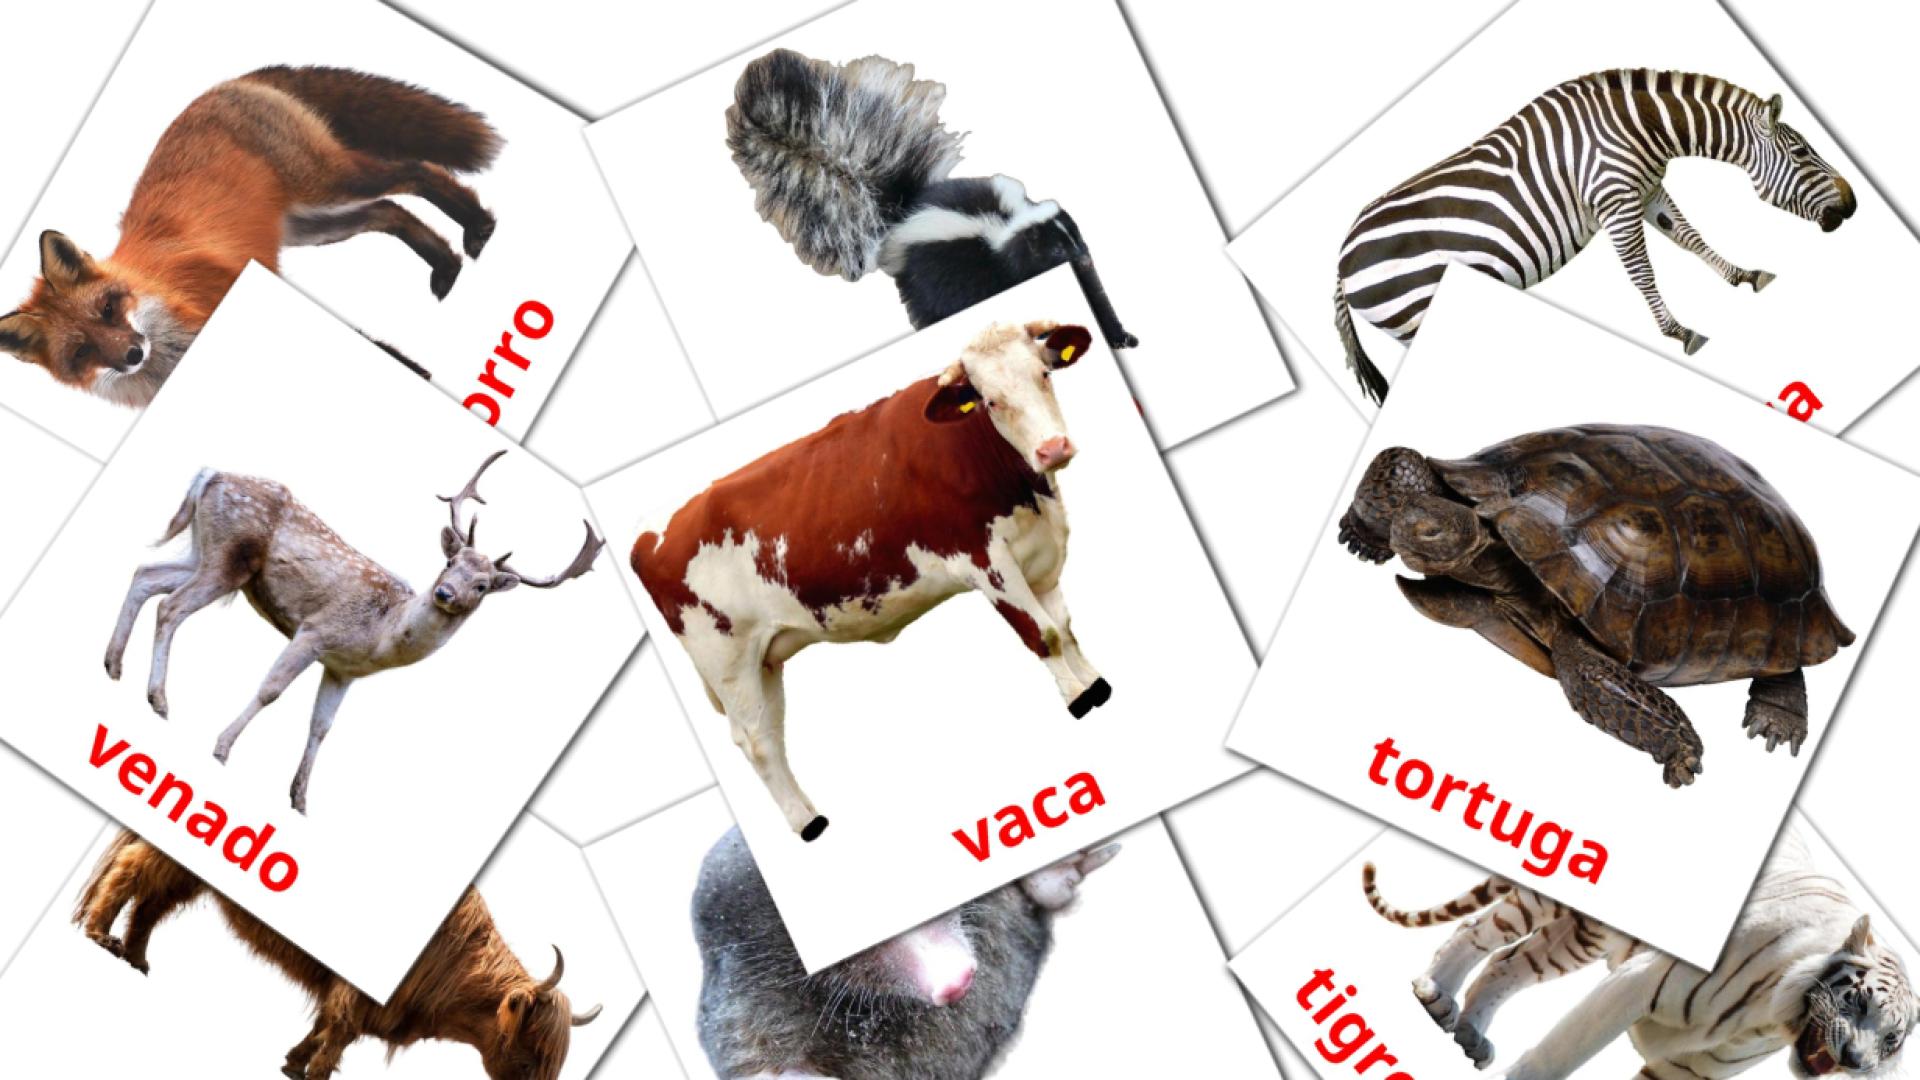 punjabi(gurmukhi) tarjetas de vocabulario en Animales